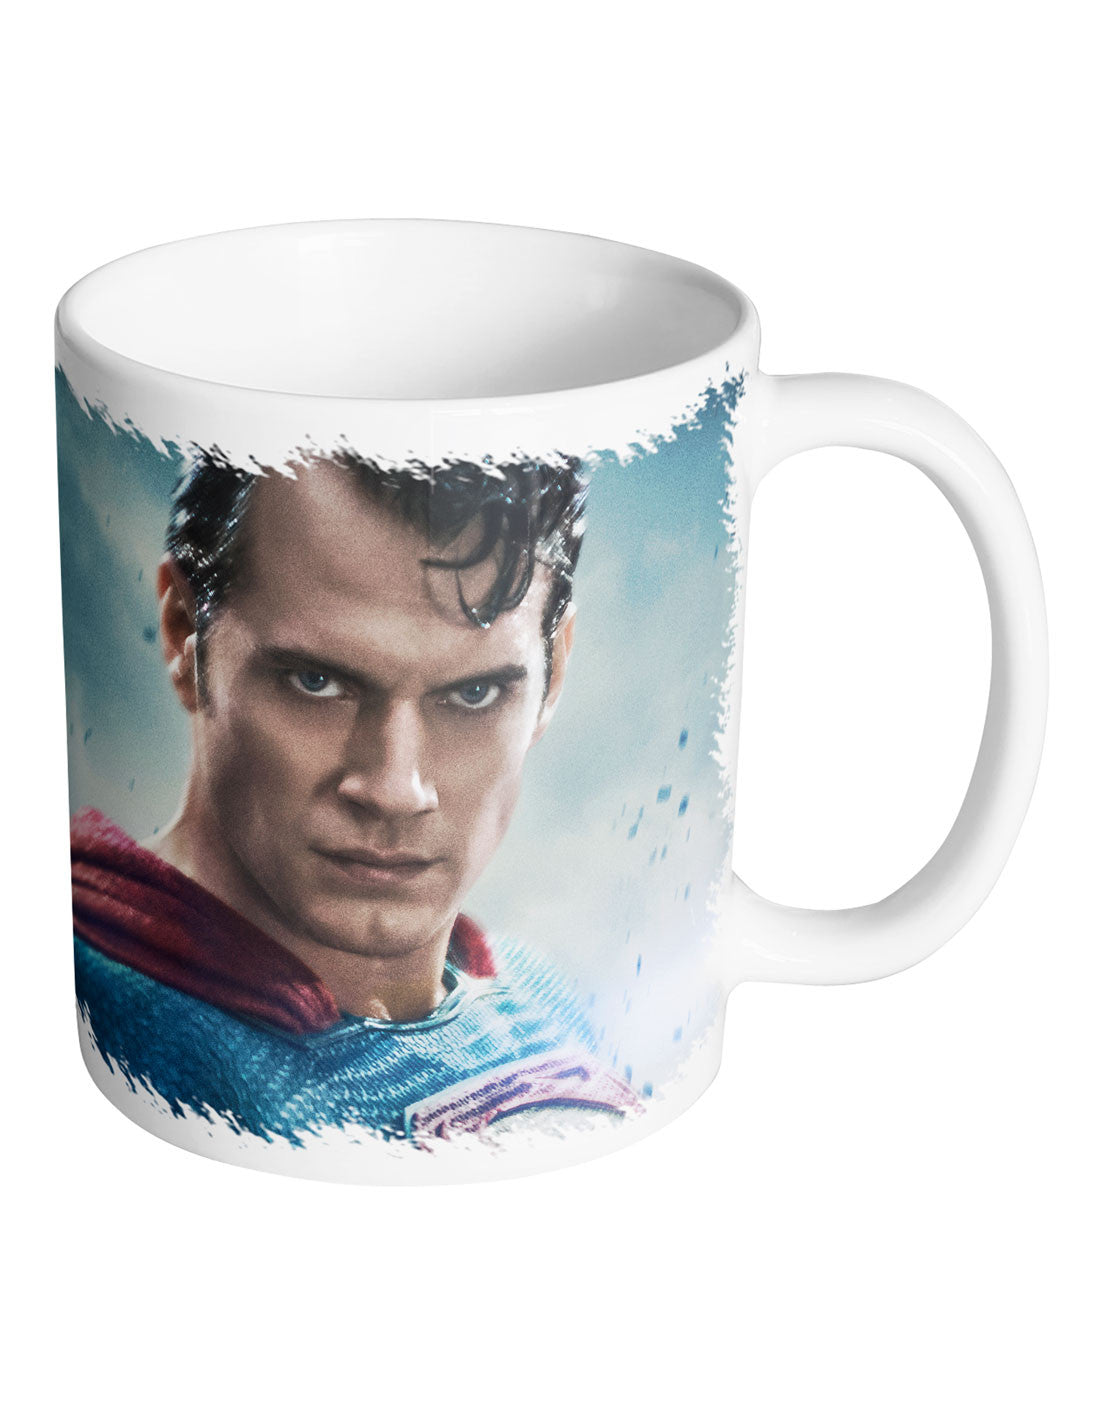 Mug DC Comics BVS - Superman